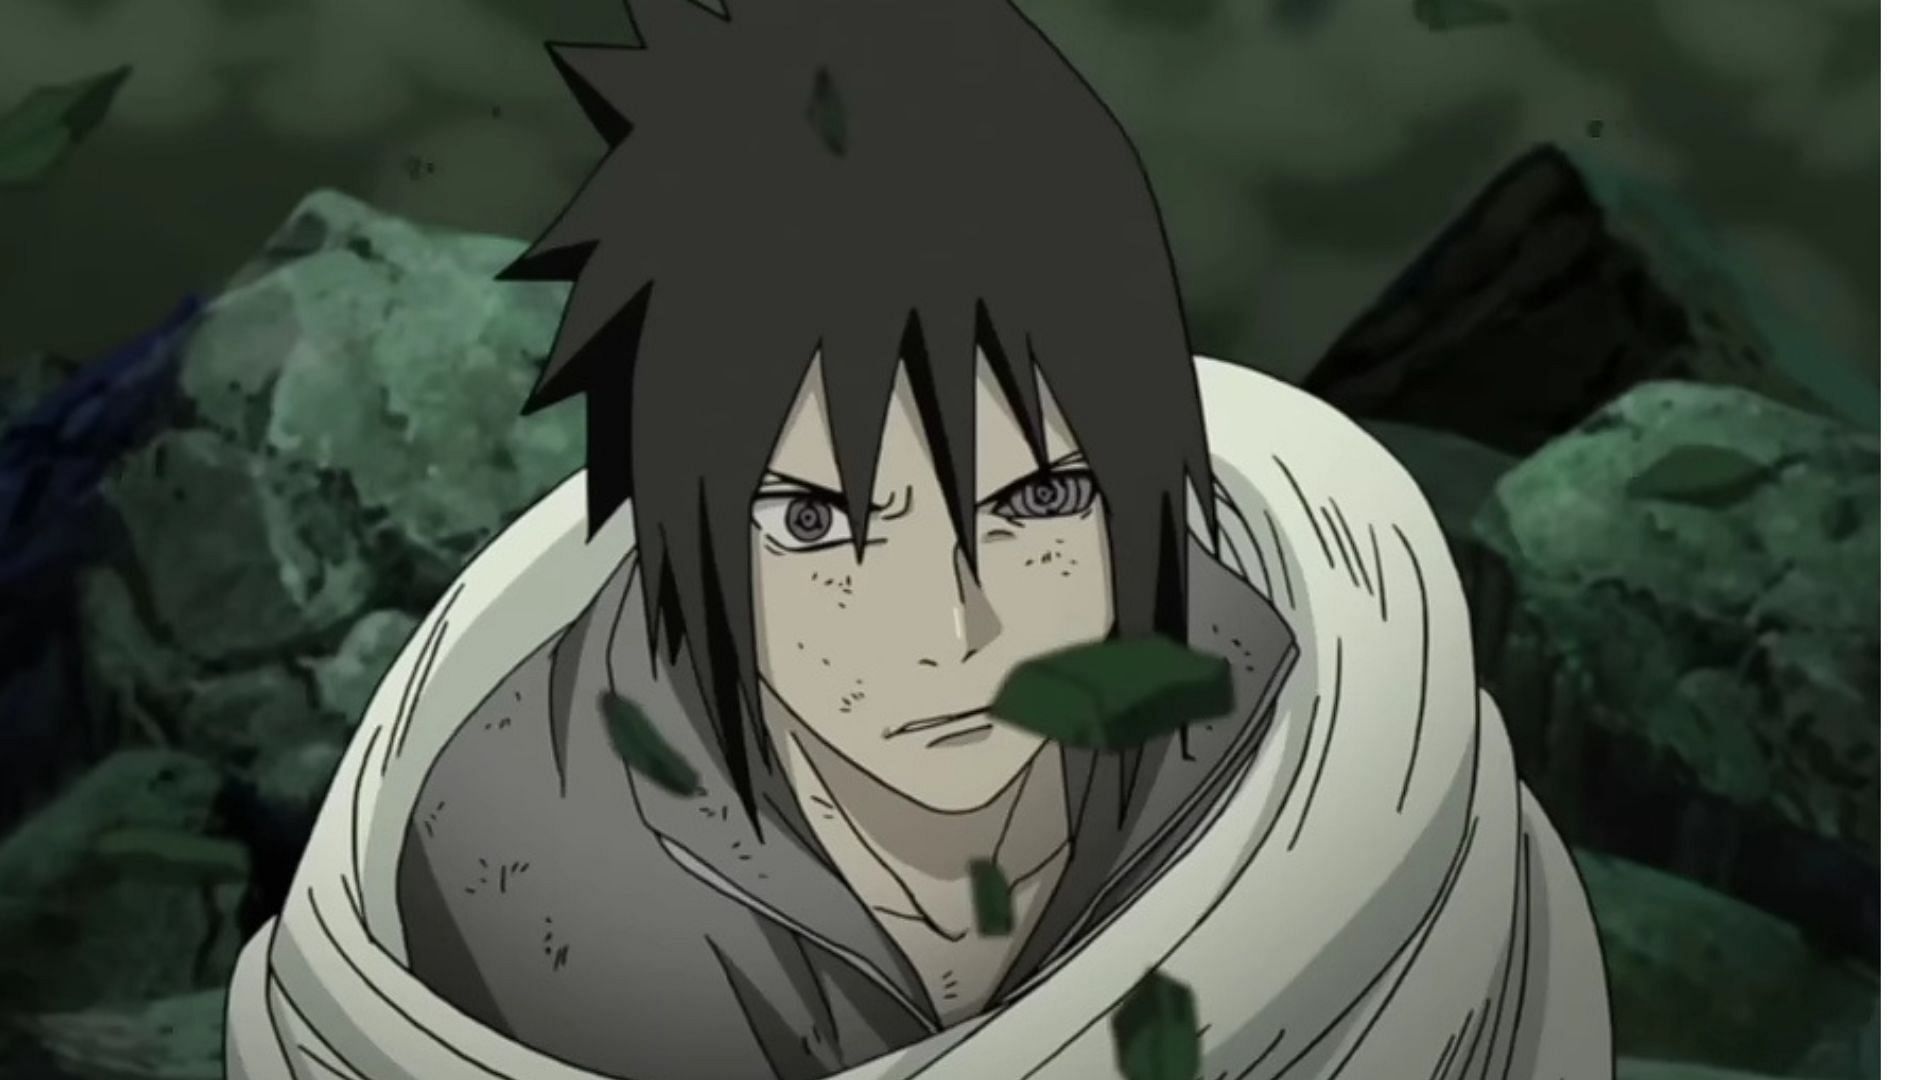 Sasuke as seen in the anime Naruto (Image via Studio Pierrot)